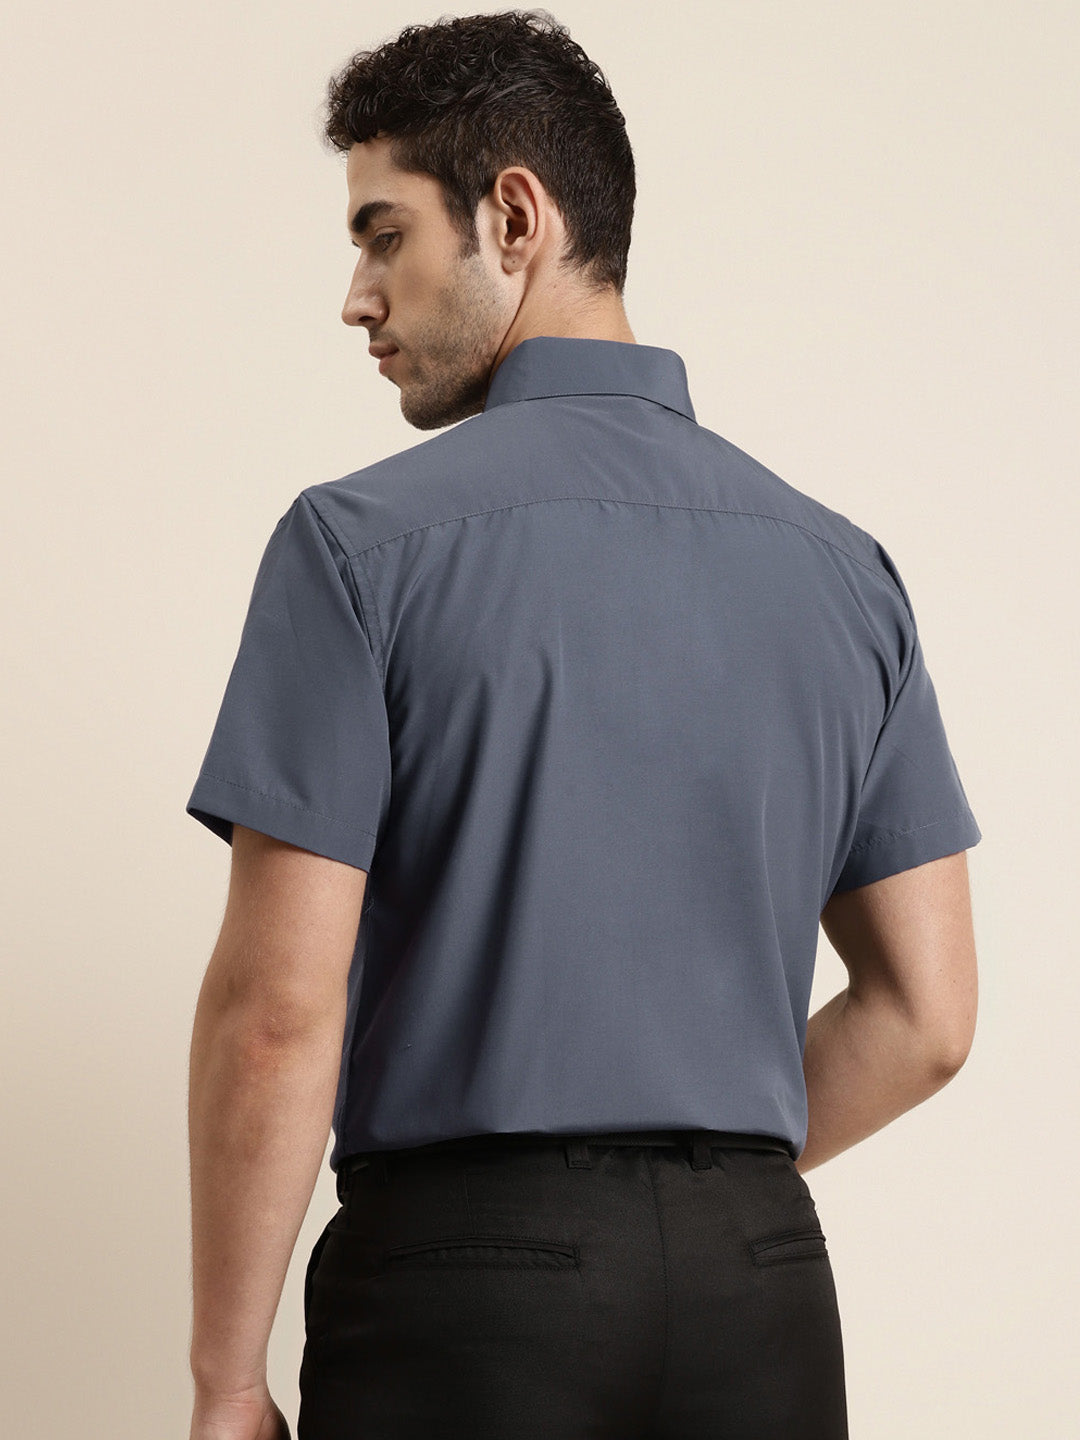 Men's Cotton Charcoal Grey Half sleeves Casual Shirt